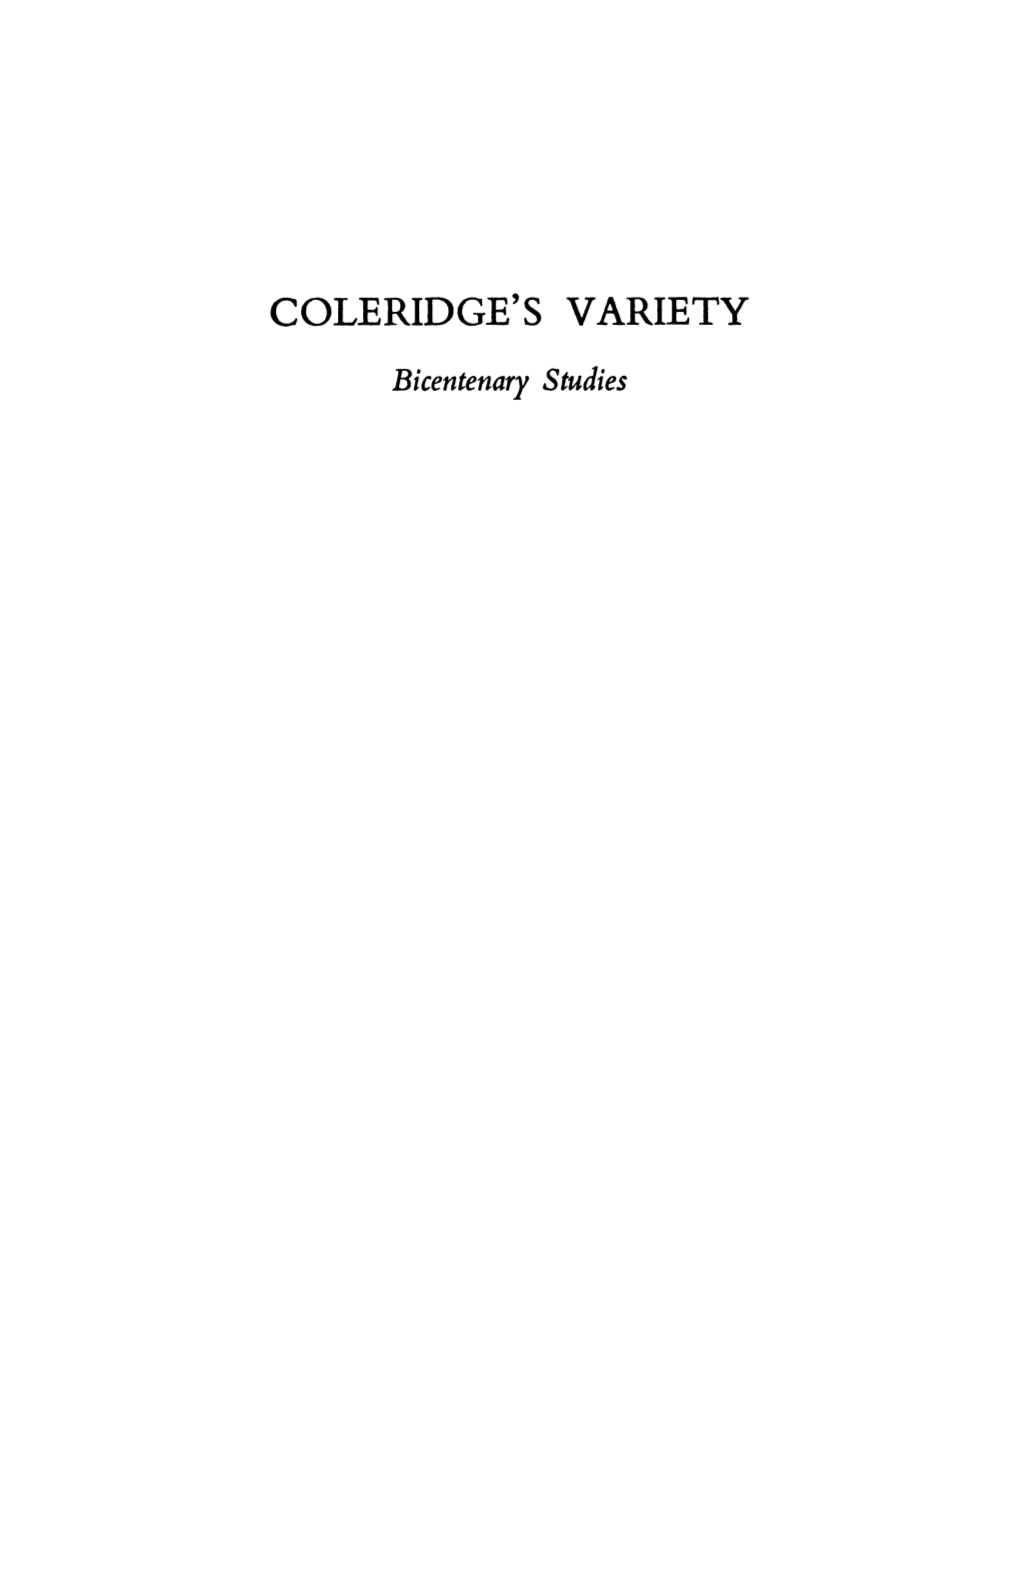 Coleridge's Variety